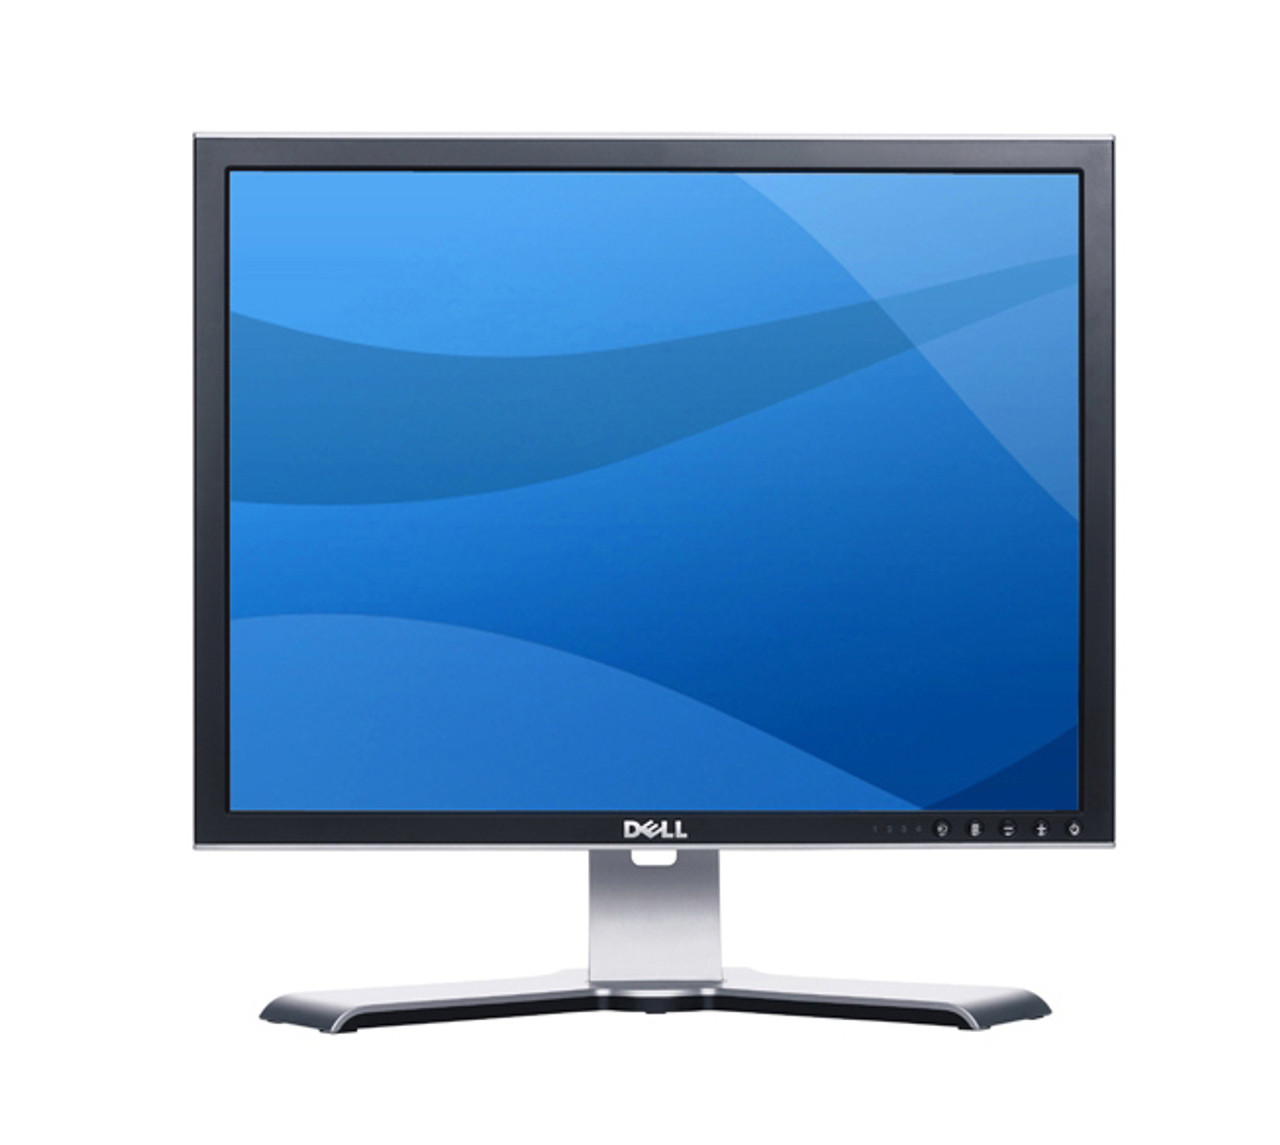 C9536 - Dell 20.1-inch UltraSharp 2007FP 1600 x 1200 at 60Hz Flat Panel LCD Monitor